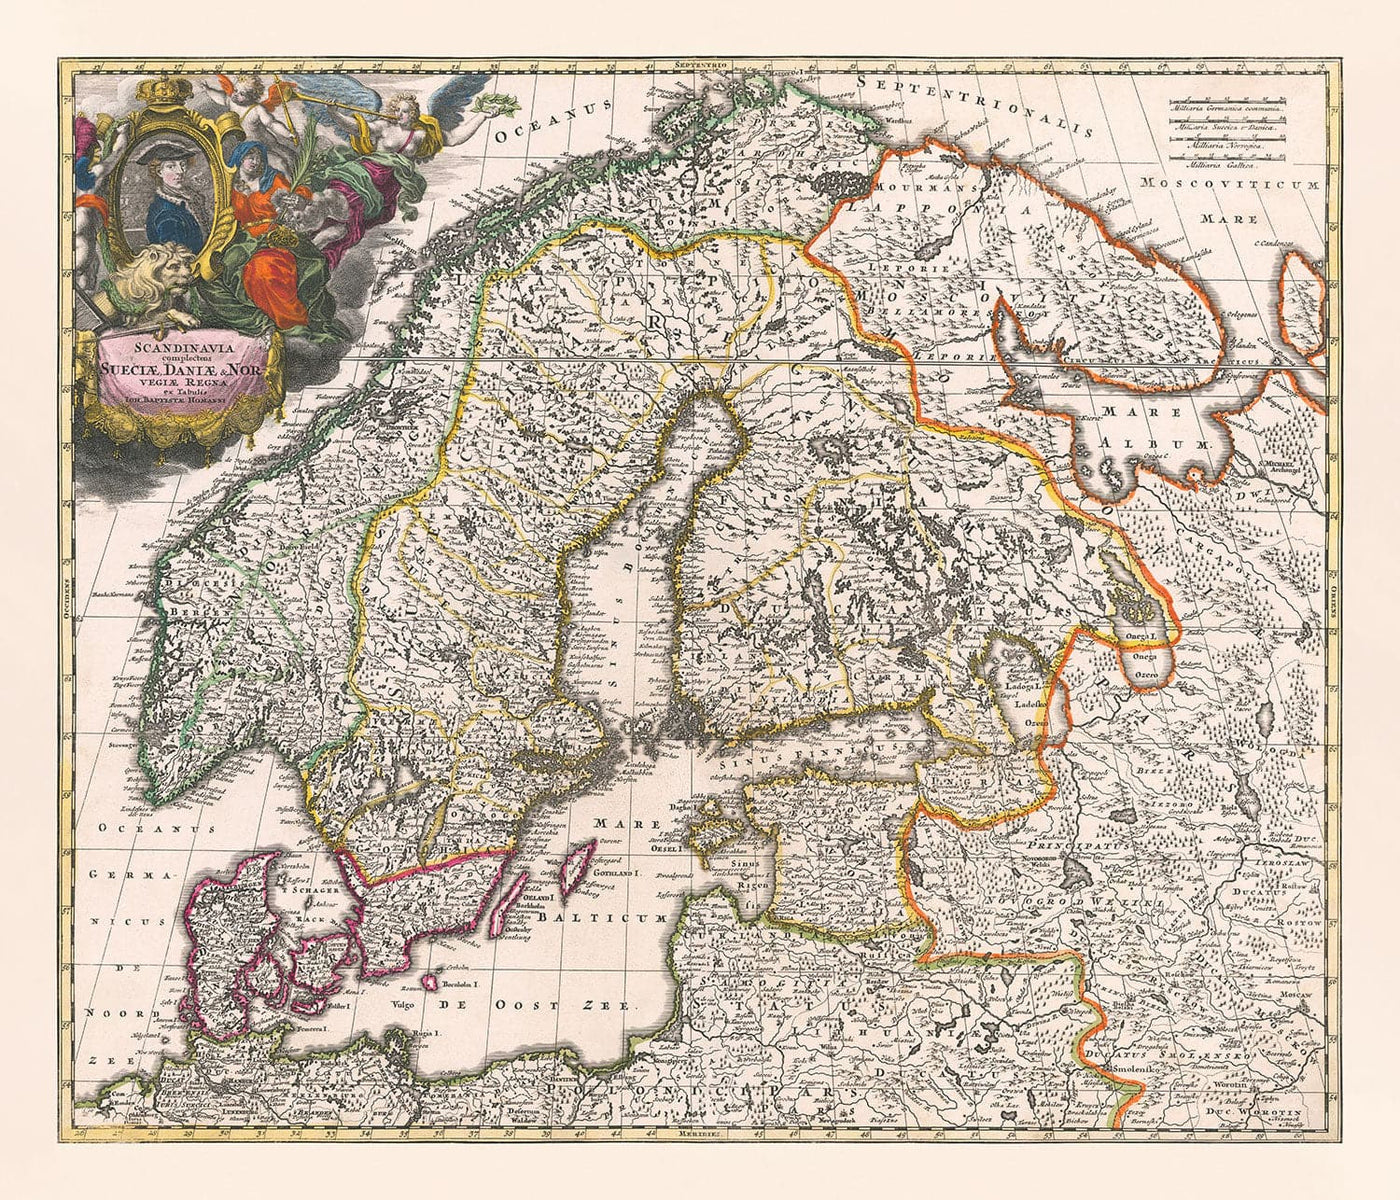 Old Map of Scandinavia, 1720 by Johann Baptist Homann - Nordic, Baltic, Denmark, Sweden, Finland, Russia, Estonia, Latvia, Lithuania